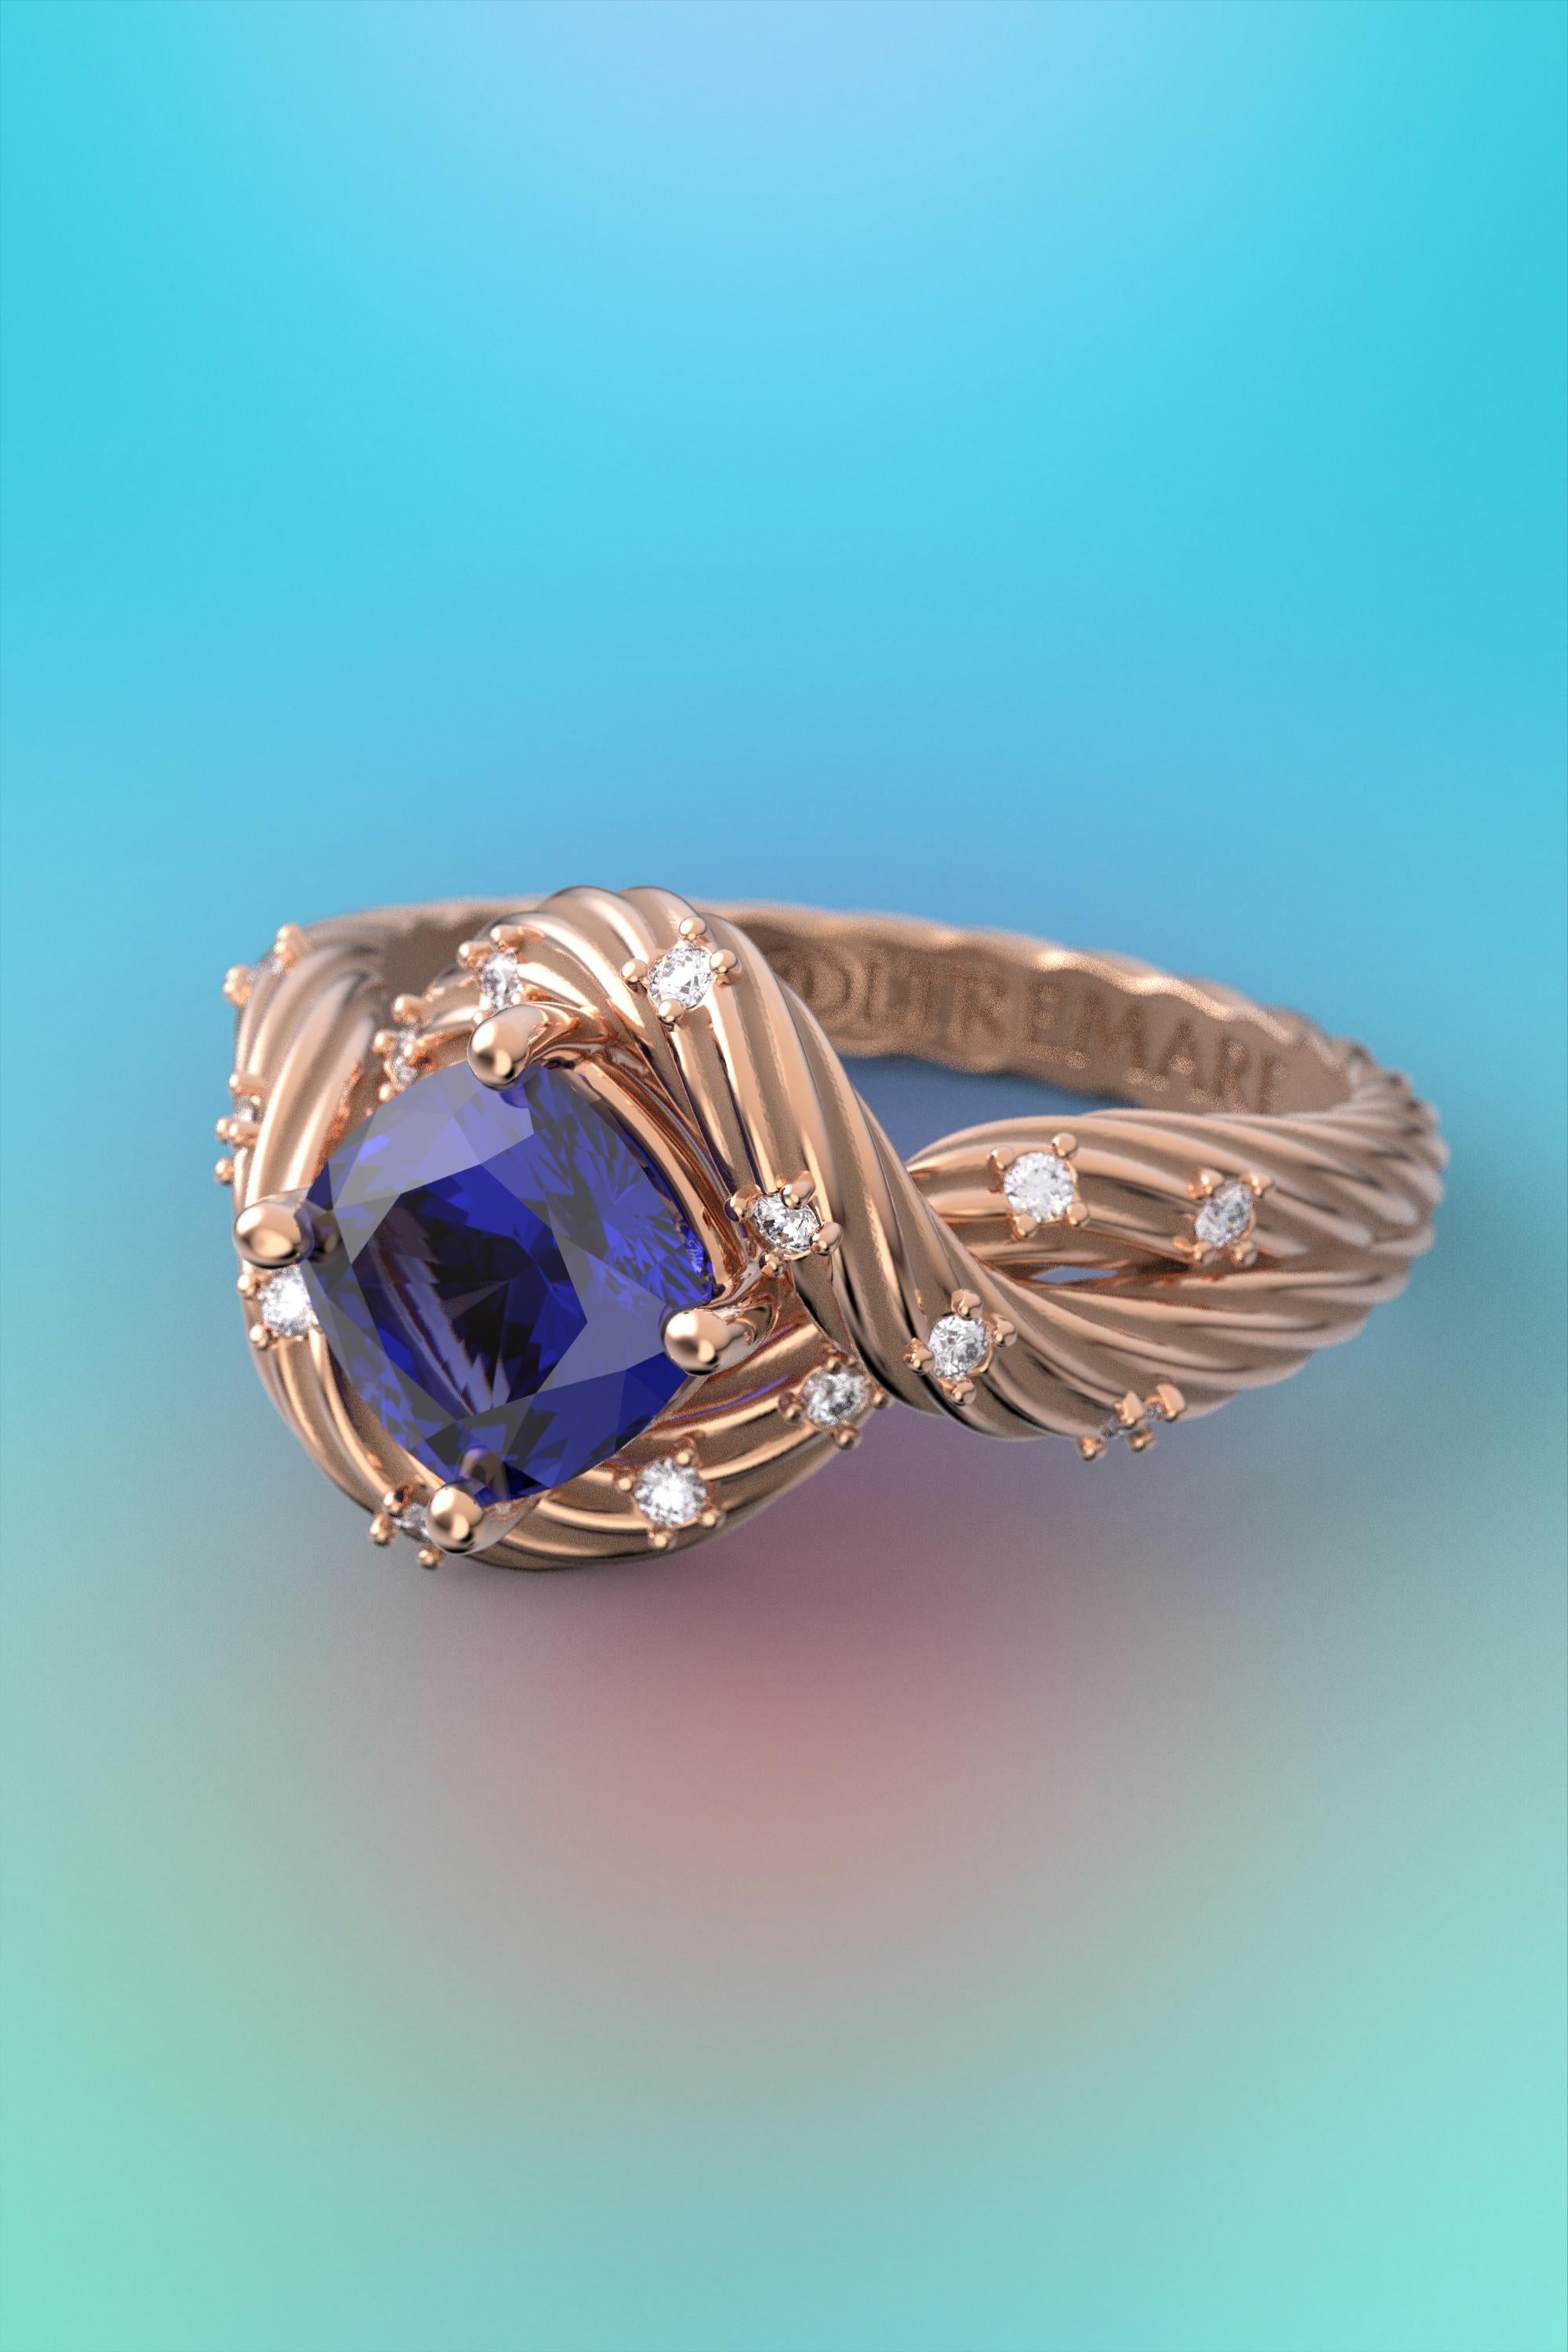 For Sale:  Tanzanite and Diamonds Statement Ring in 18k Solid Gold, Italian Fine Jewelry 13